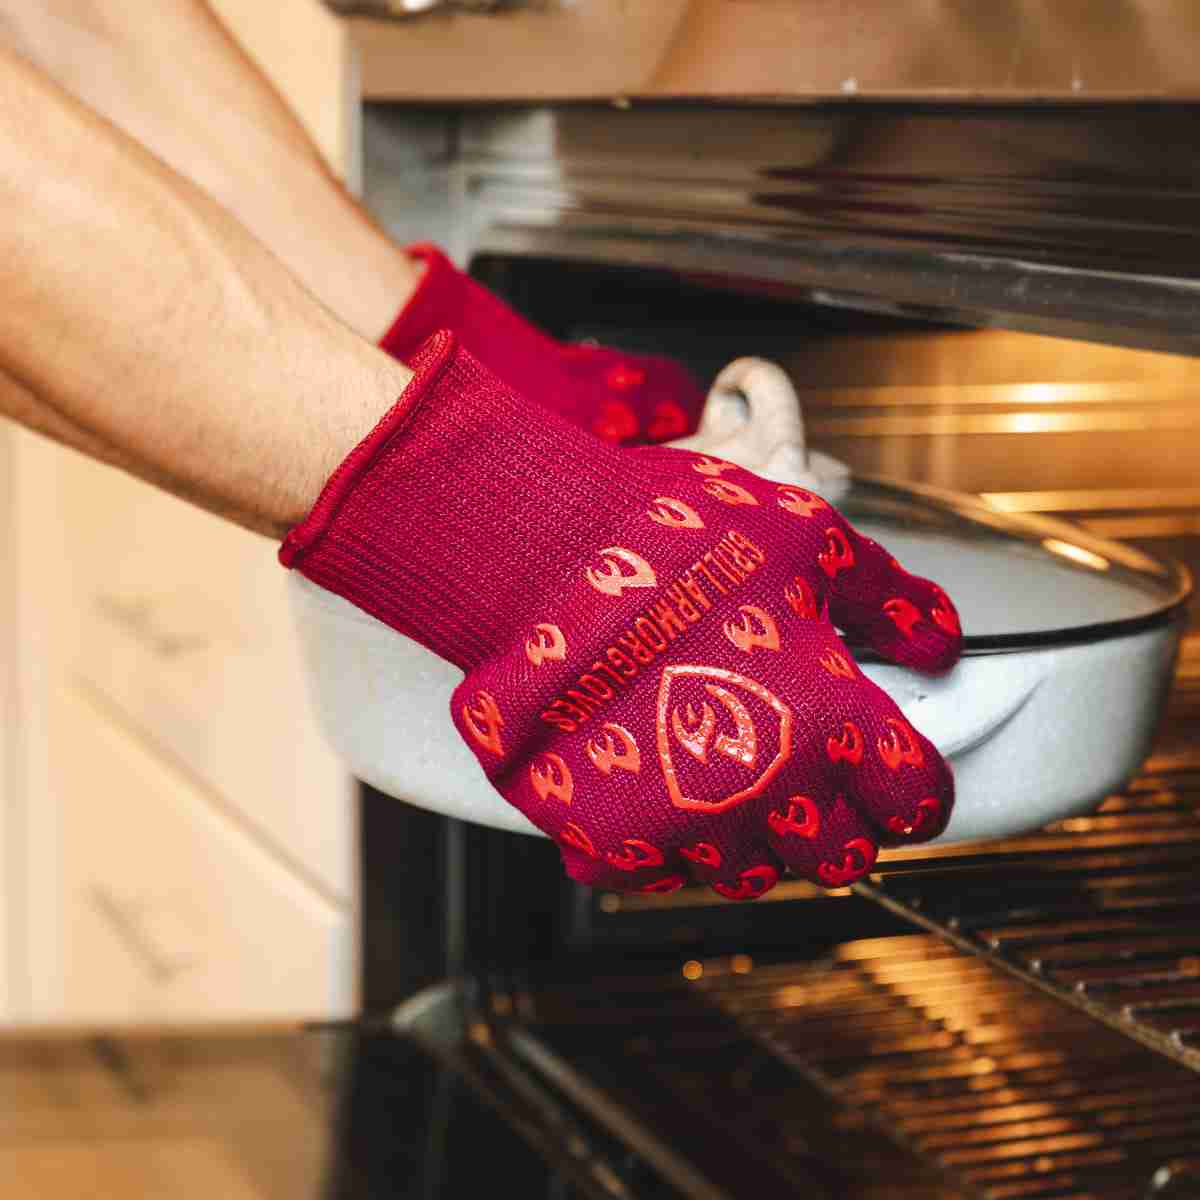 Primal Grilling Gloves, Ultra Heat Resistant Grill & Oven Mitts, Virtu